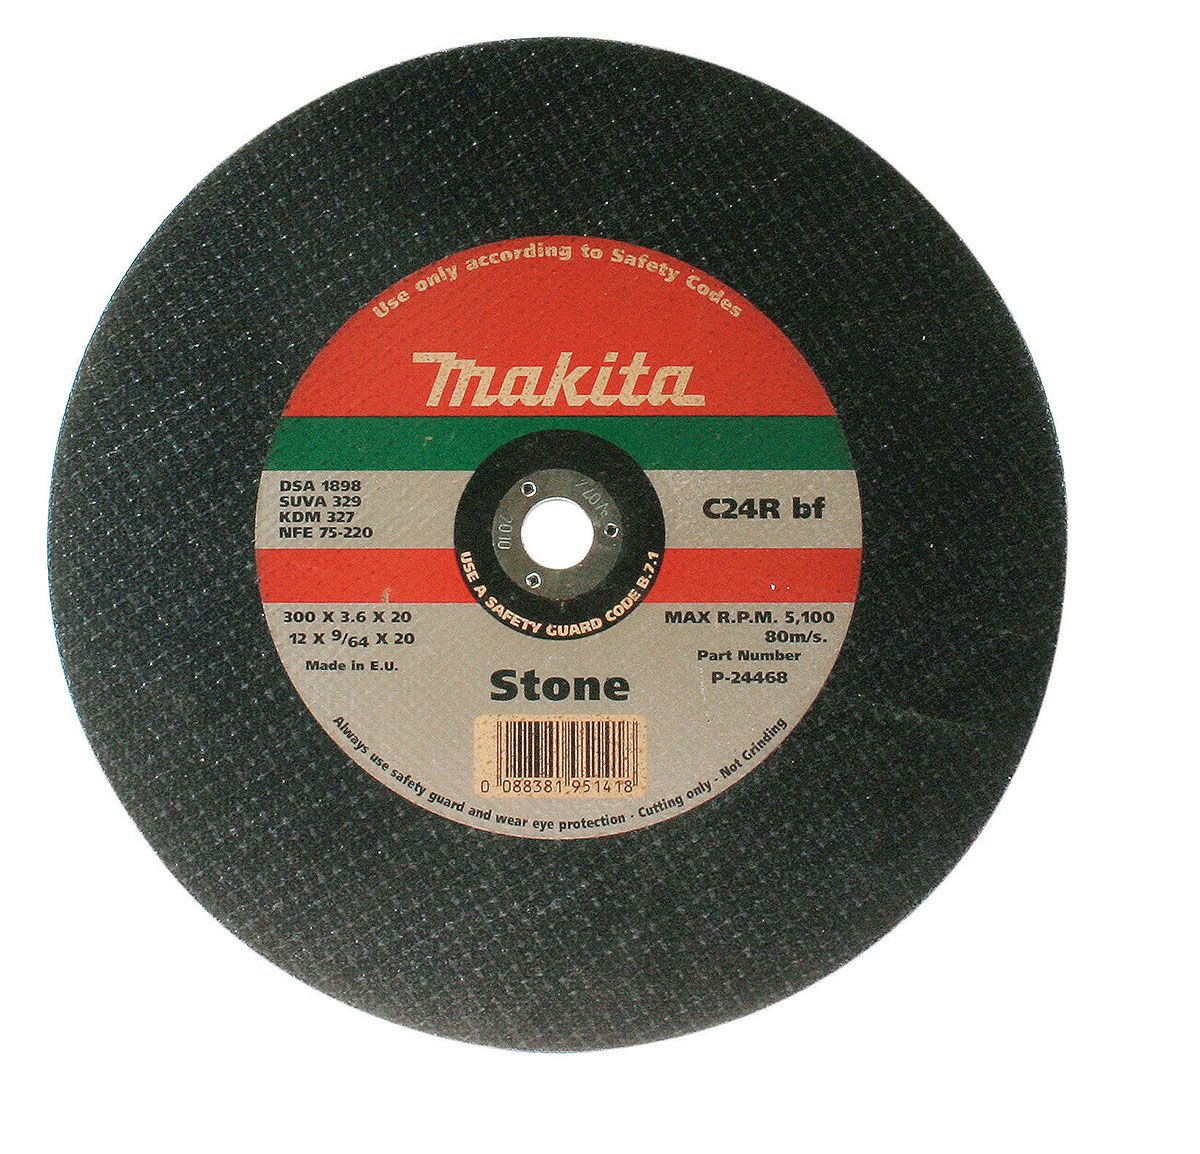 Makita Aluminium Oxide Cutting Disc, 300mm x 3mm Thick, Coarse Grade, P80 Grit, 1 in pack